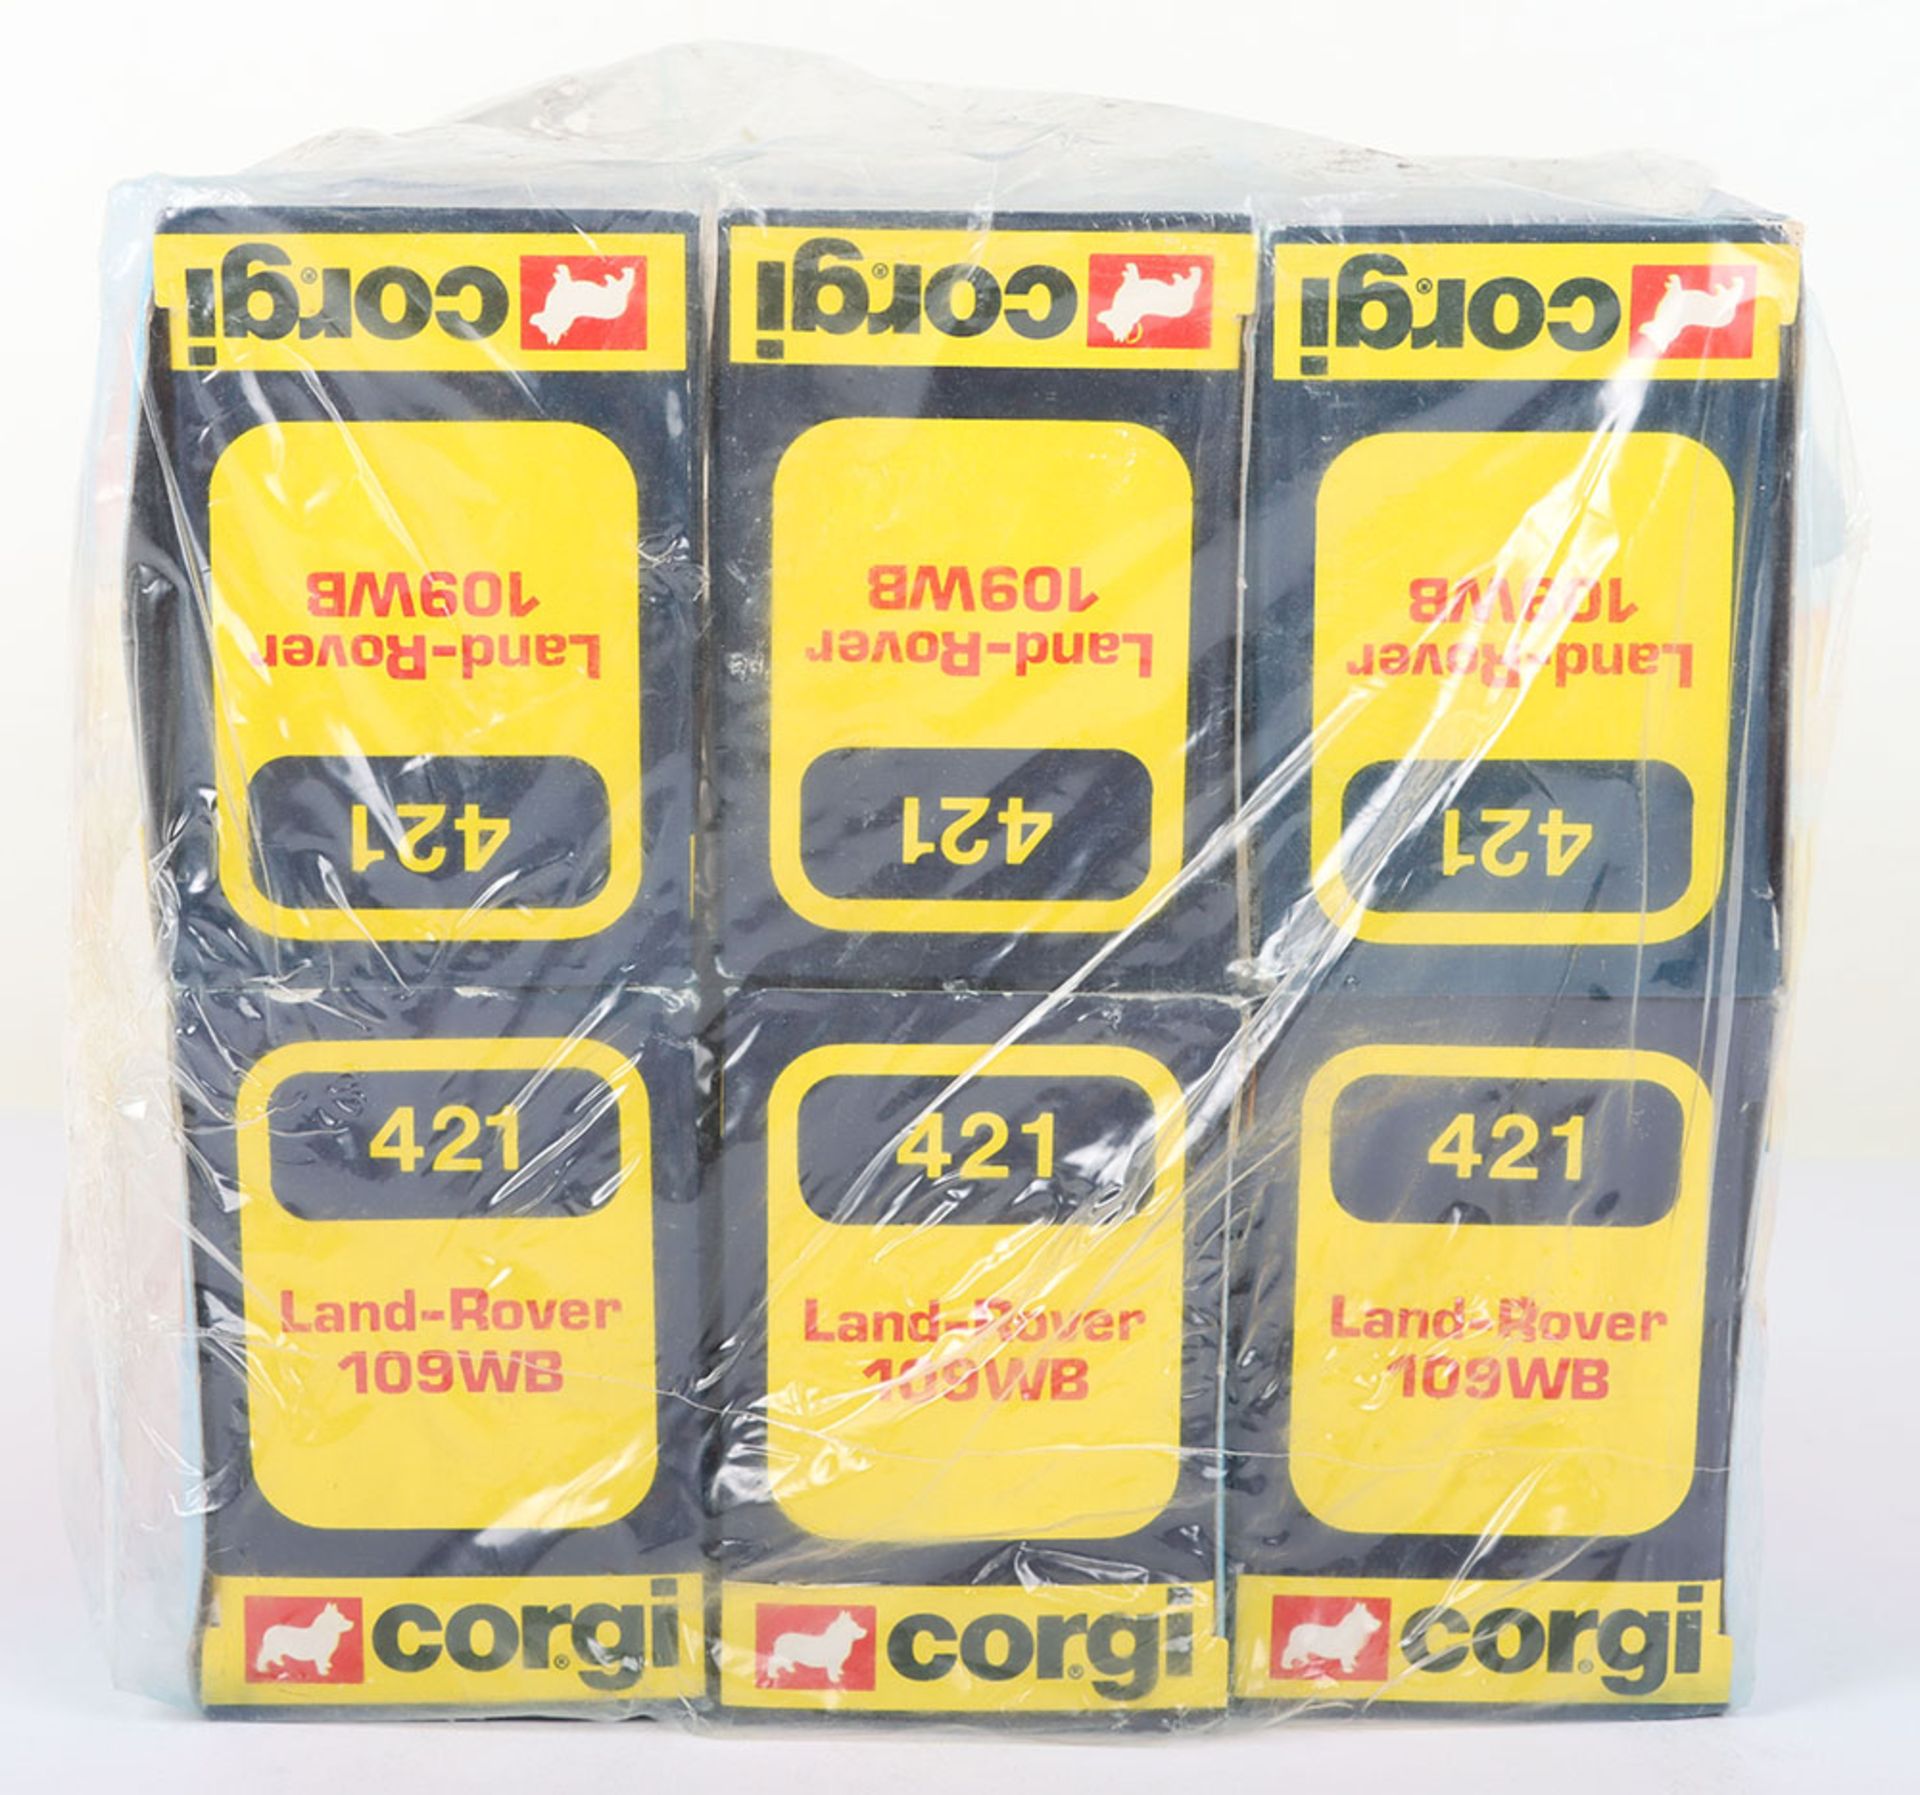 Corgi Trade Pack of six 421 Land-Rover 109WB - Image 2 of 7